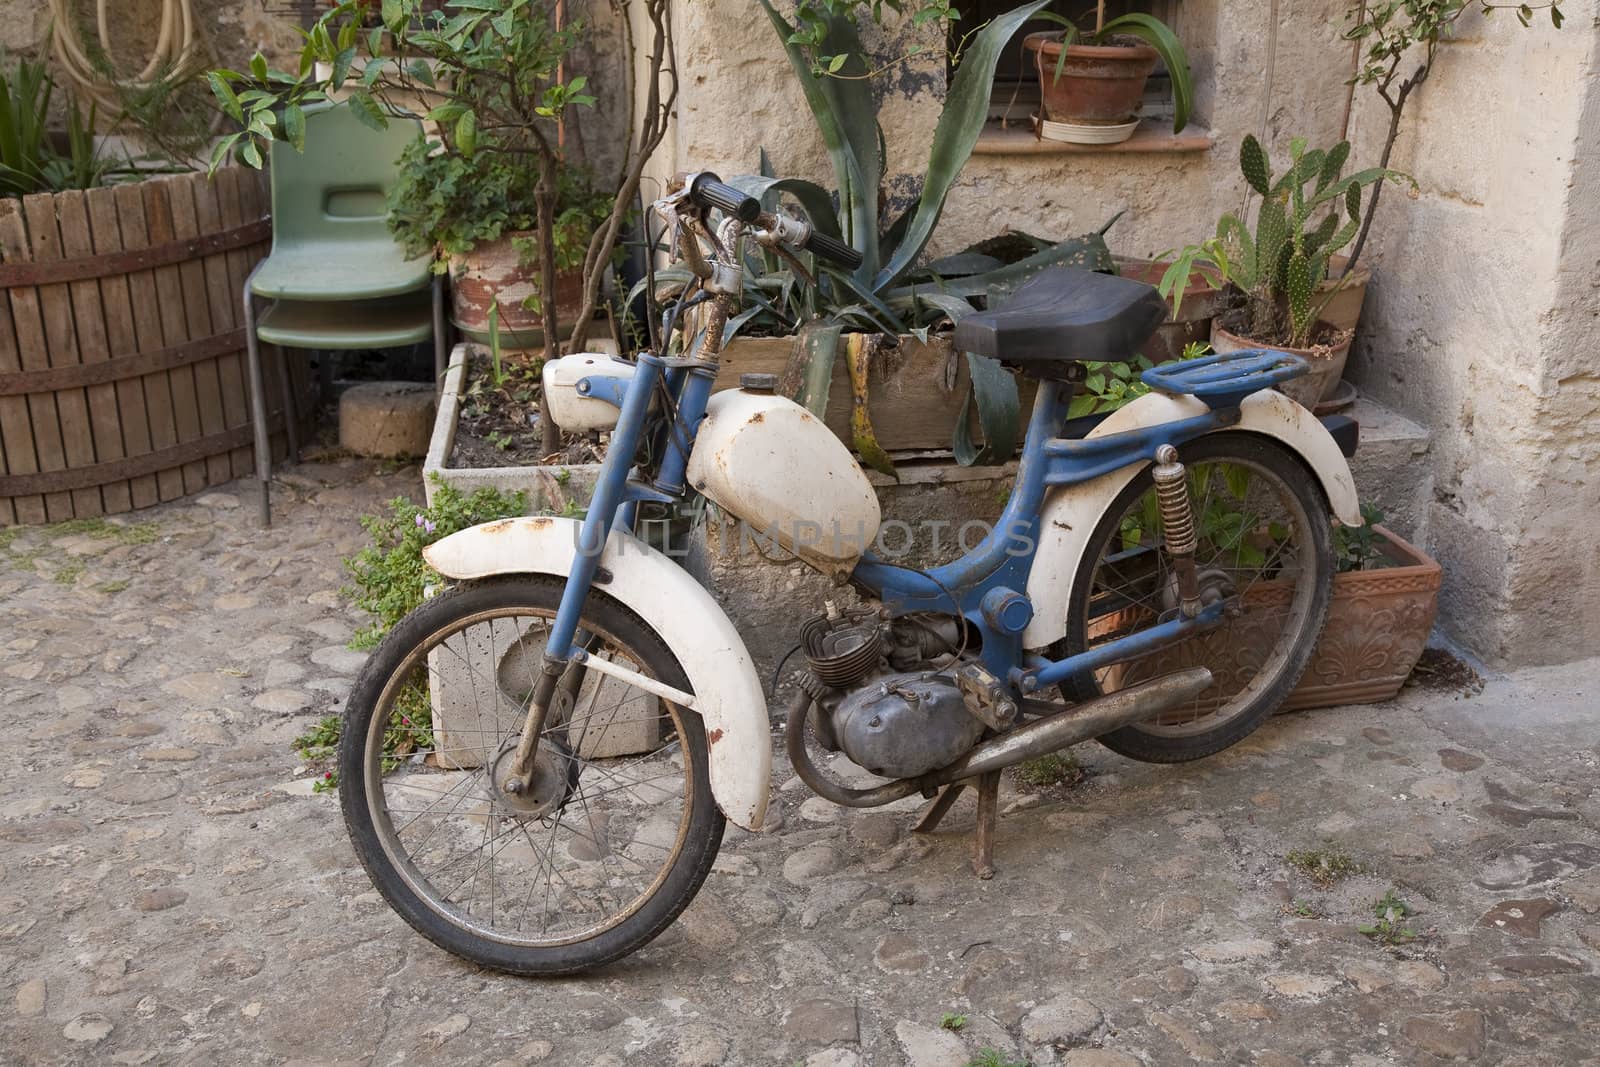 Vintage Italian moped in old courtyard - Basilicata, Italy.